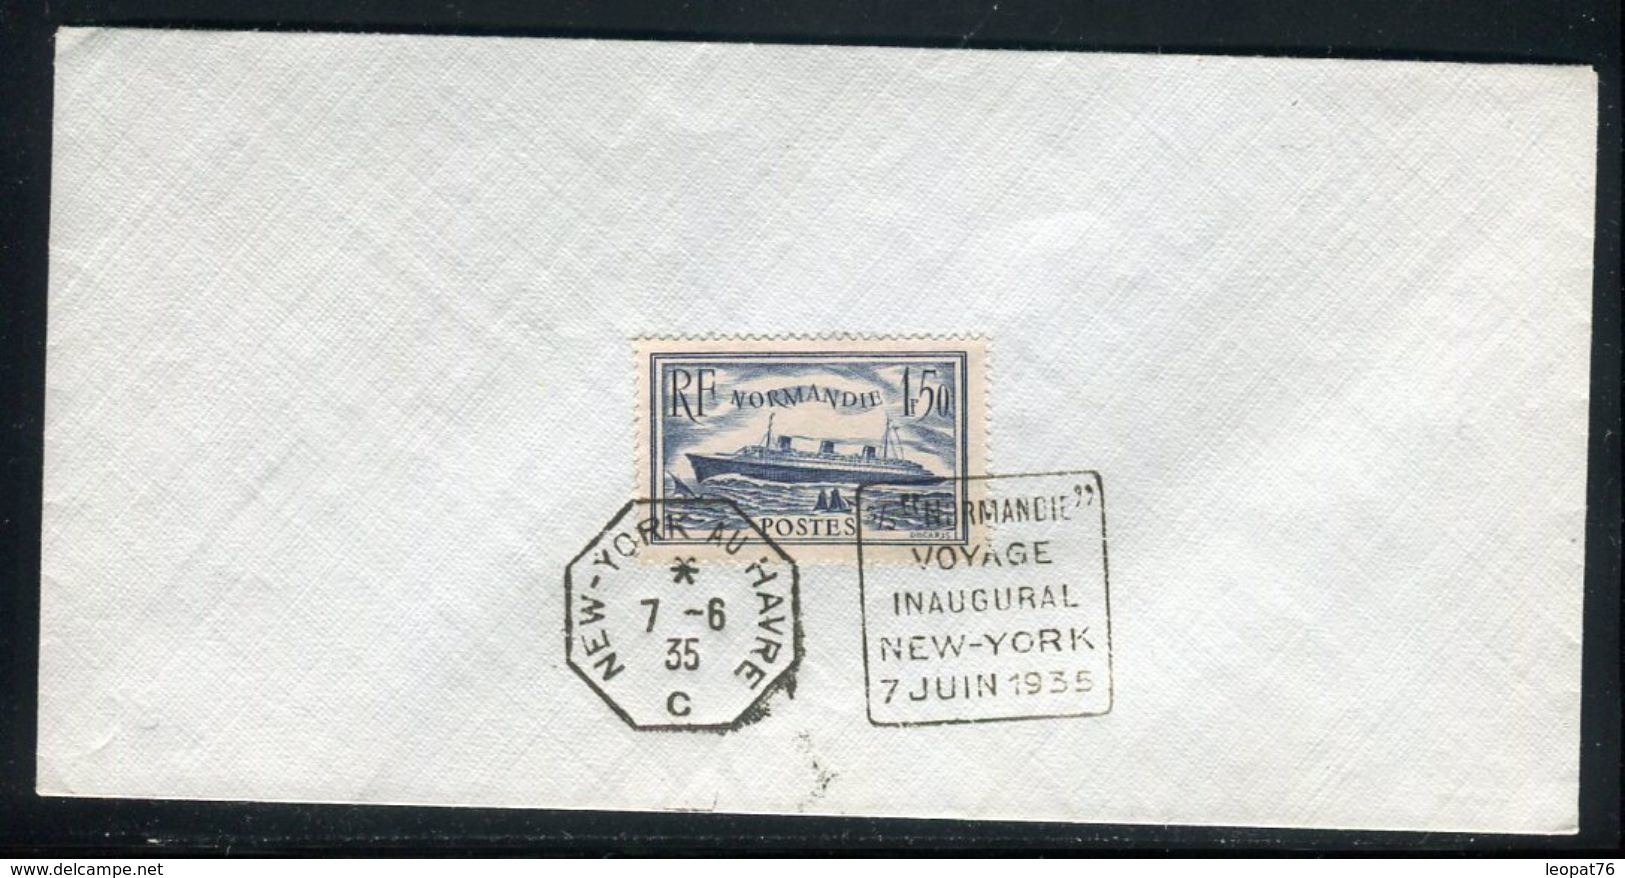 agence postale des lignes maritimes 454_0010